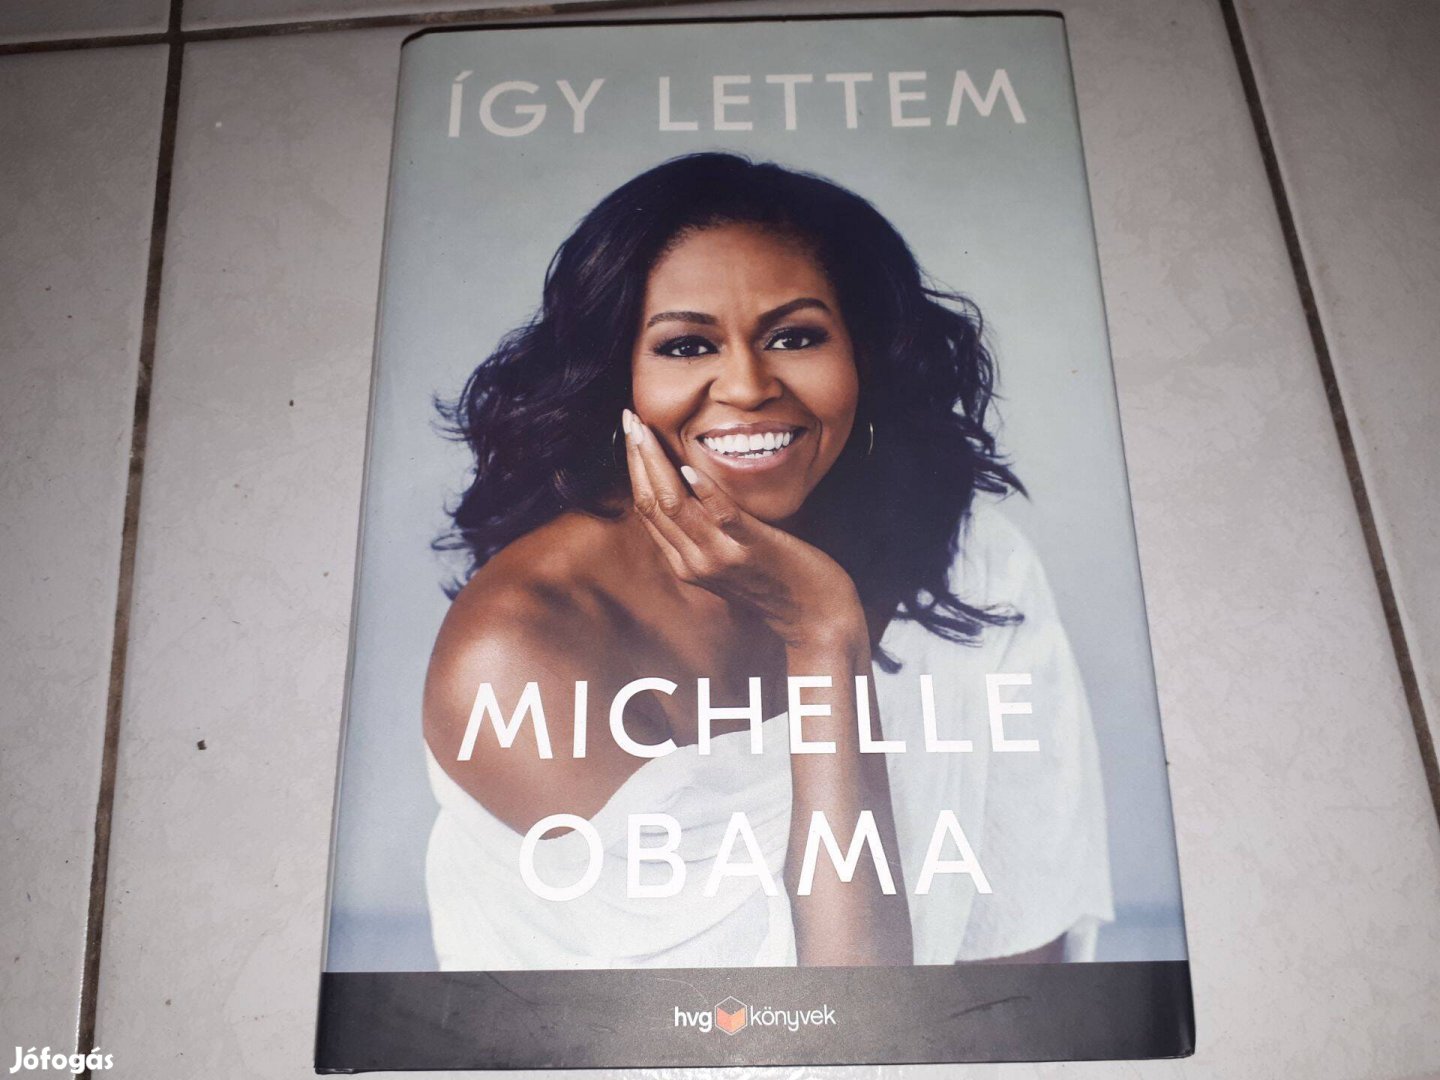 Michelle Obama - Így lettem - HVG Könyvek 2018